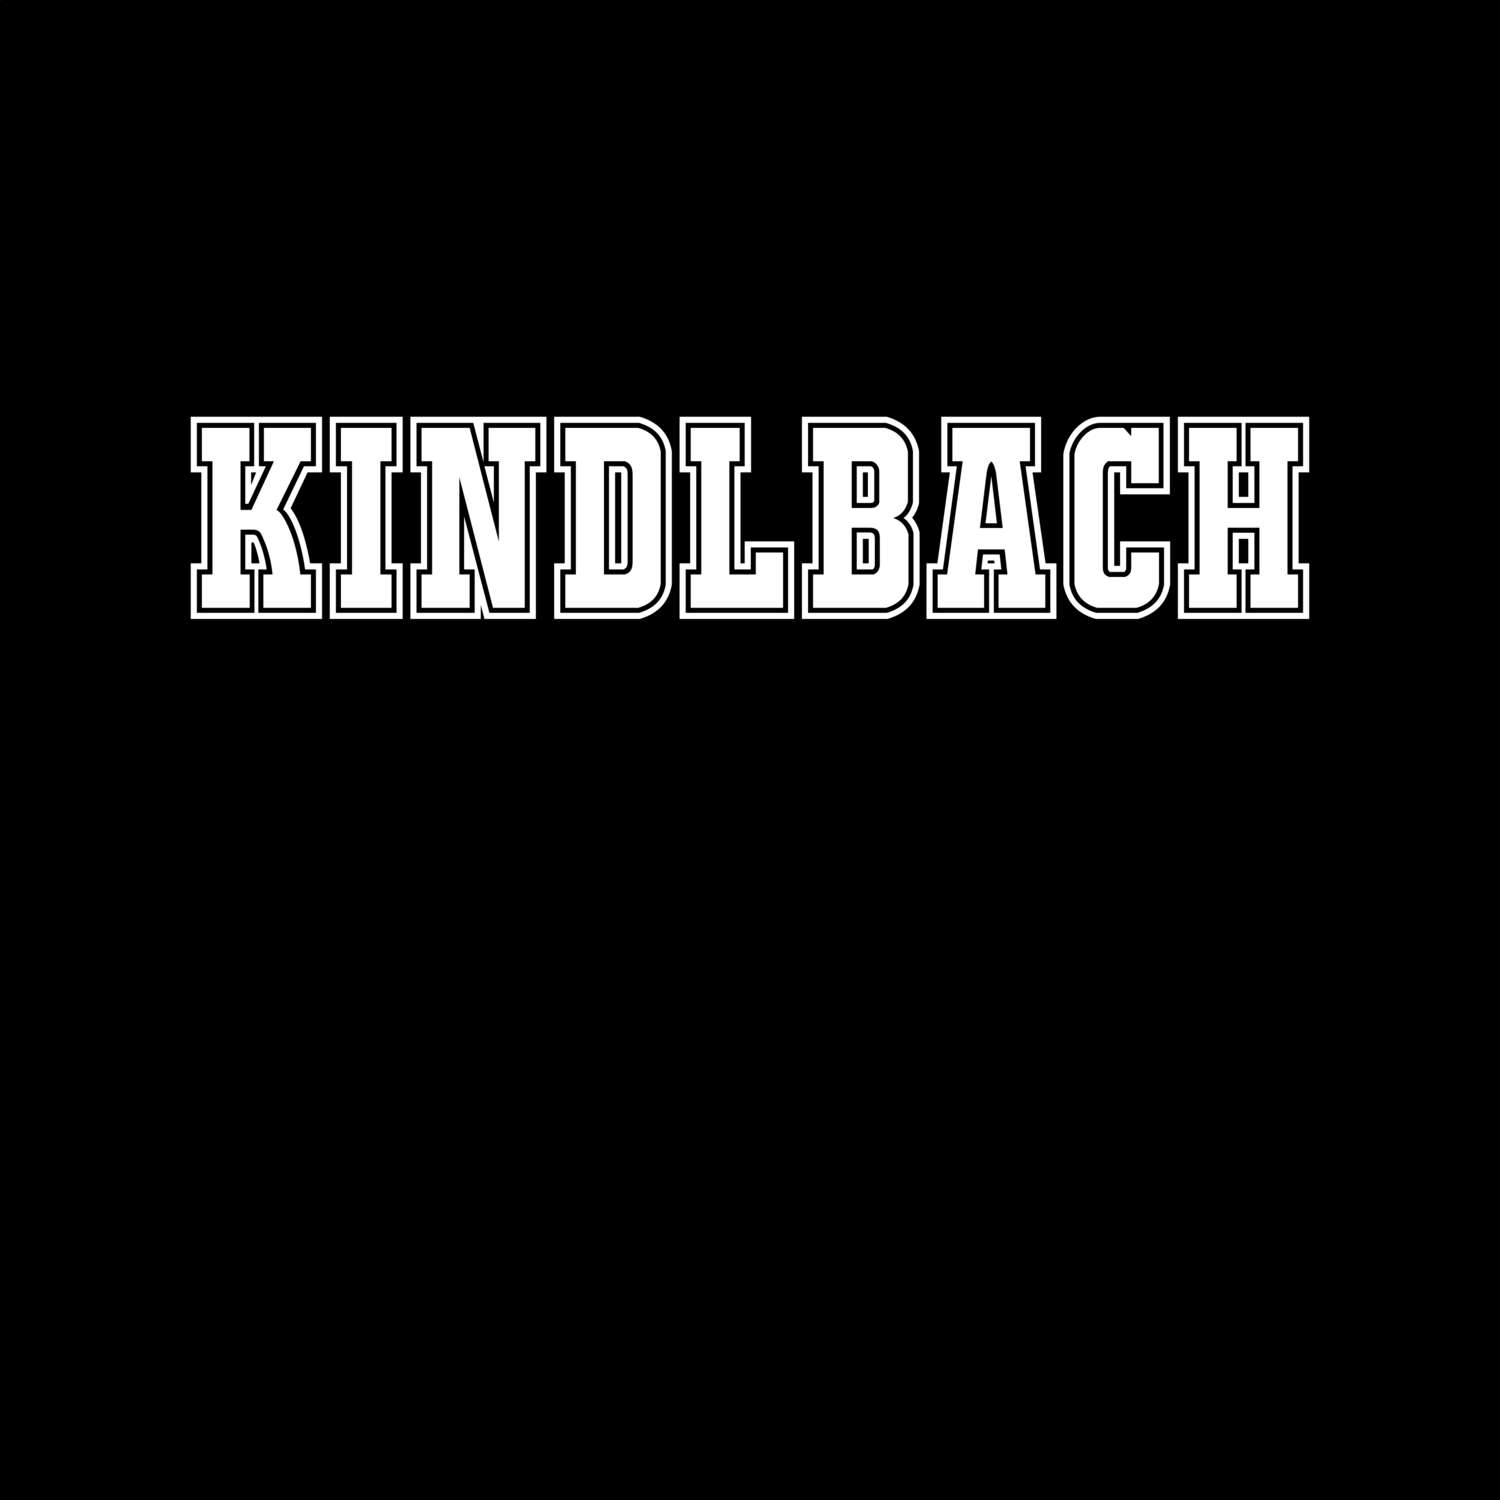 Kindlbach T-Shirt »Classic«